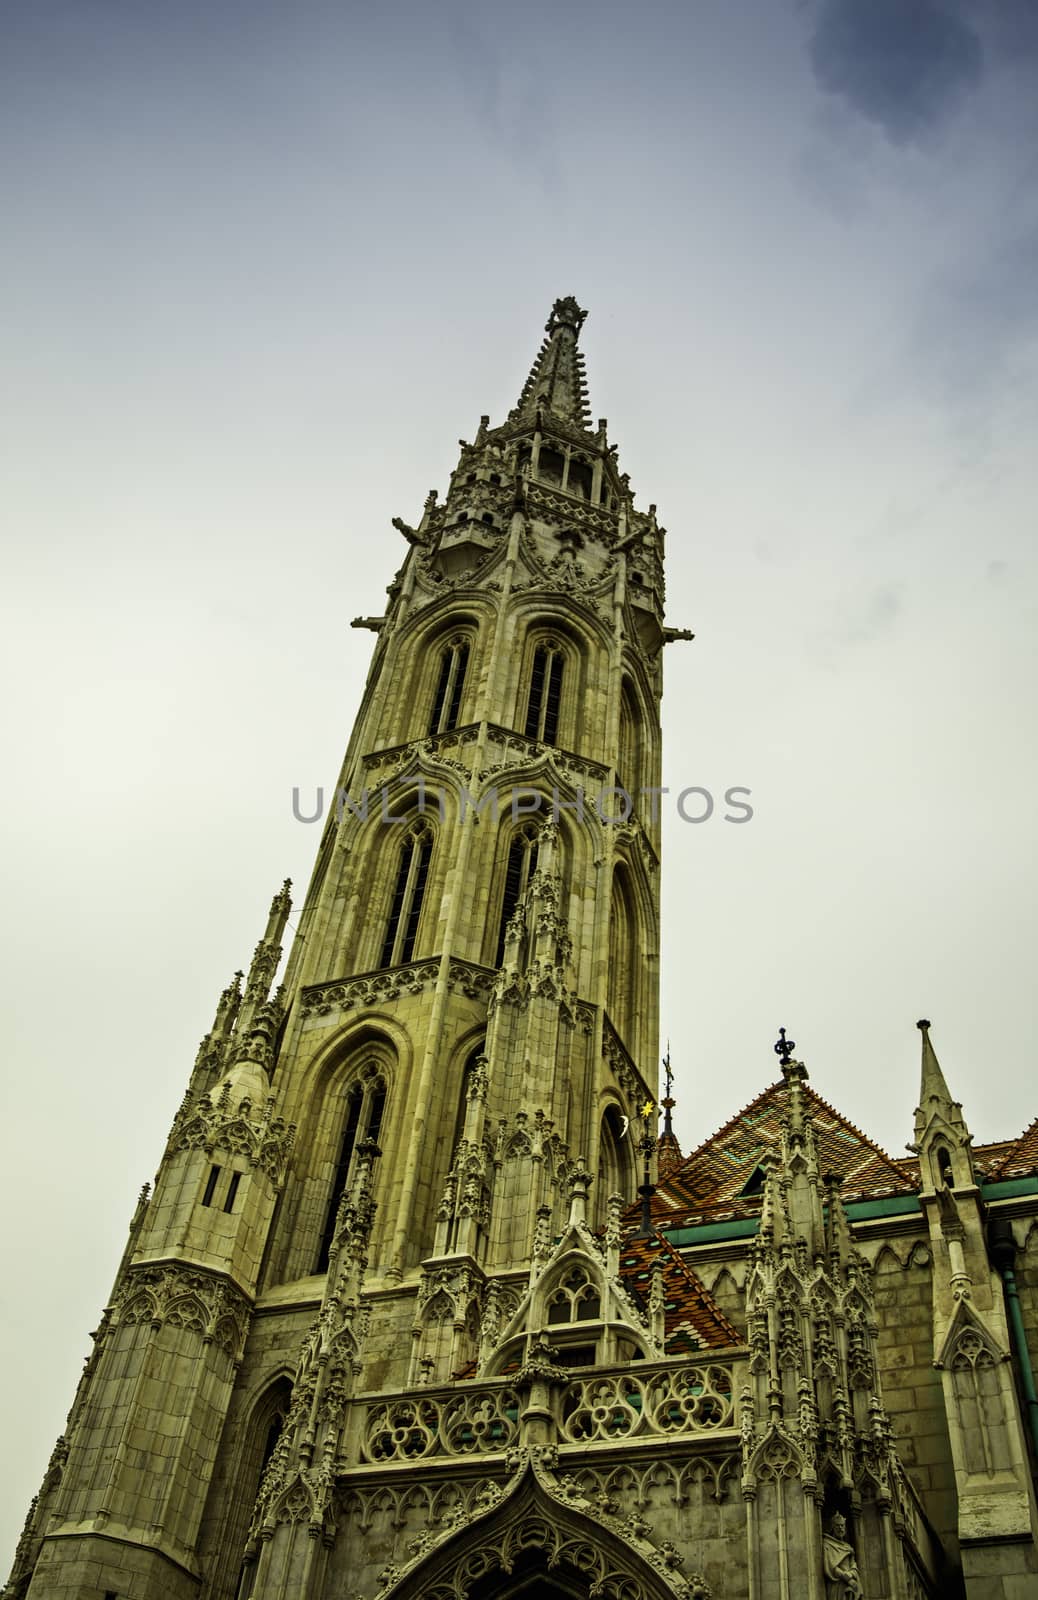 Matthias Church spire in the Fisherman's Bastion in Budapest by Mendelex